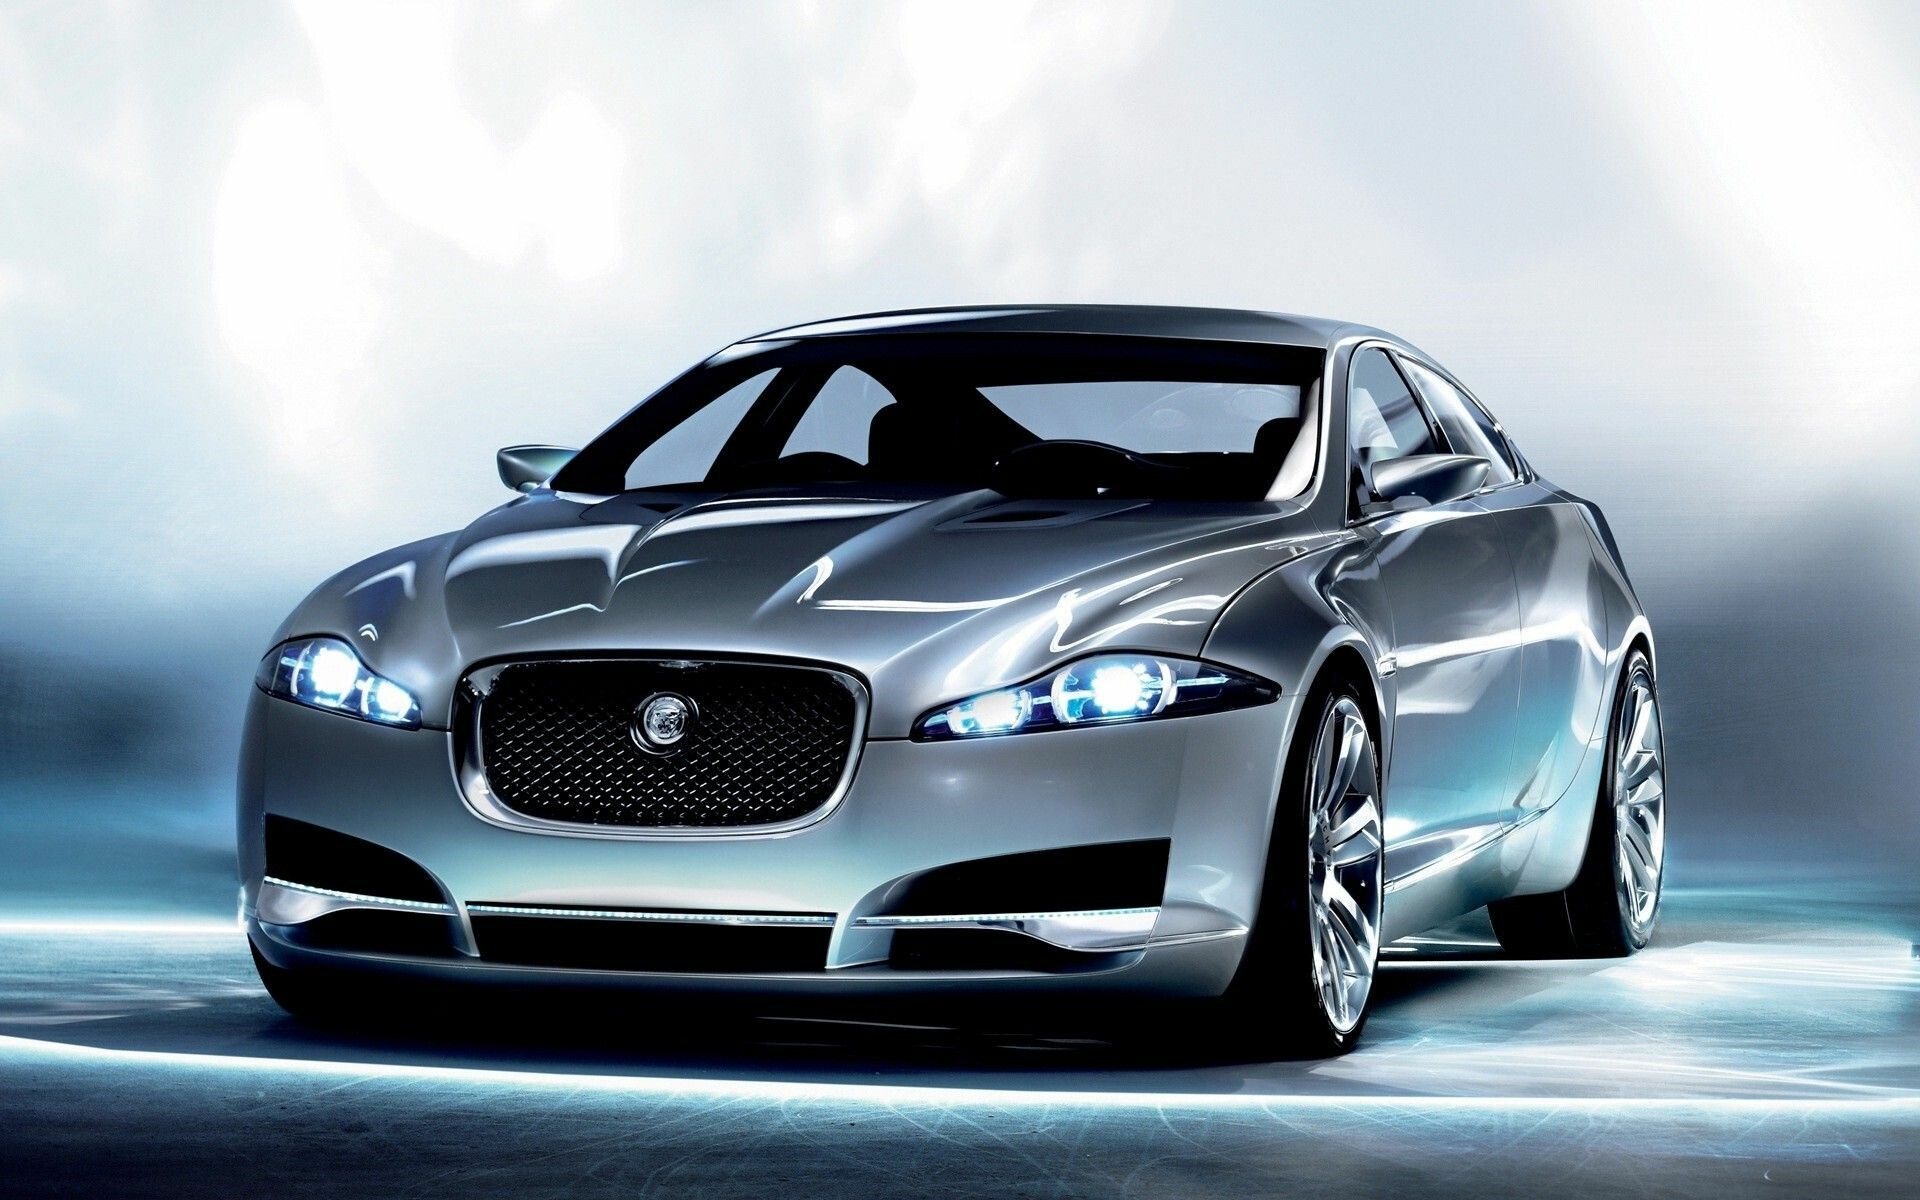 Jaguar Cars: A British luxury vehicle company, XF model. 1920x1200 HD Wallpaper.